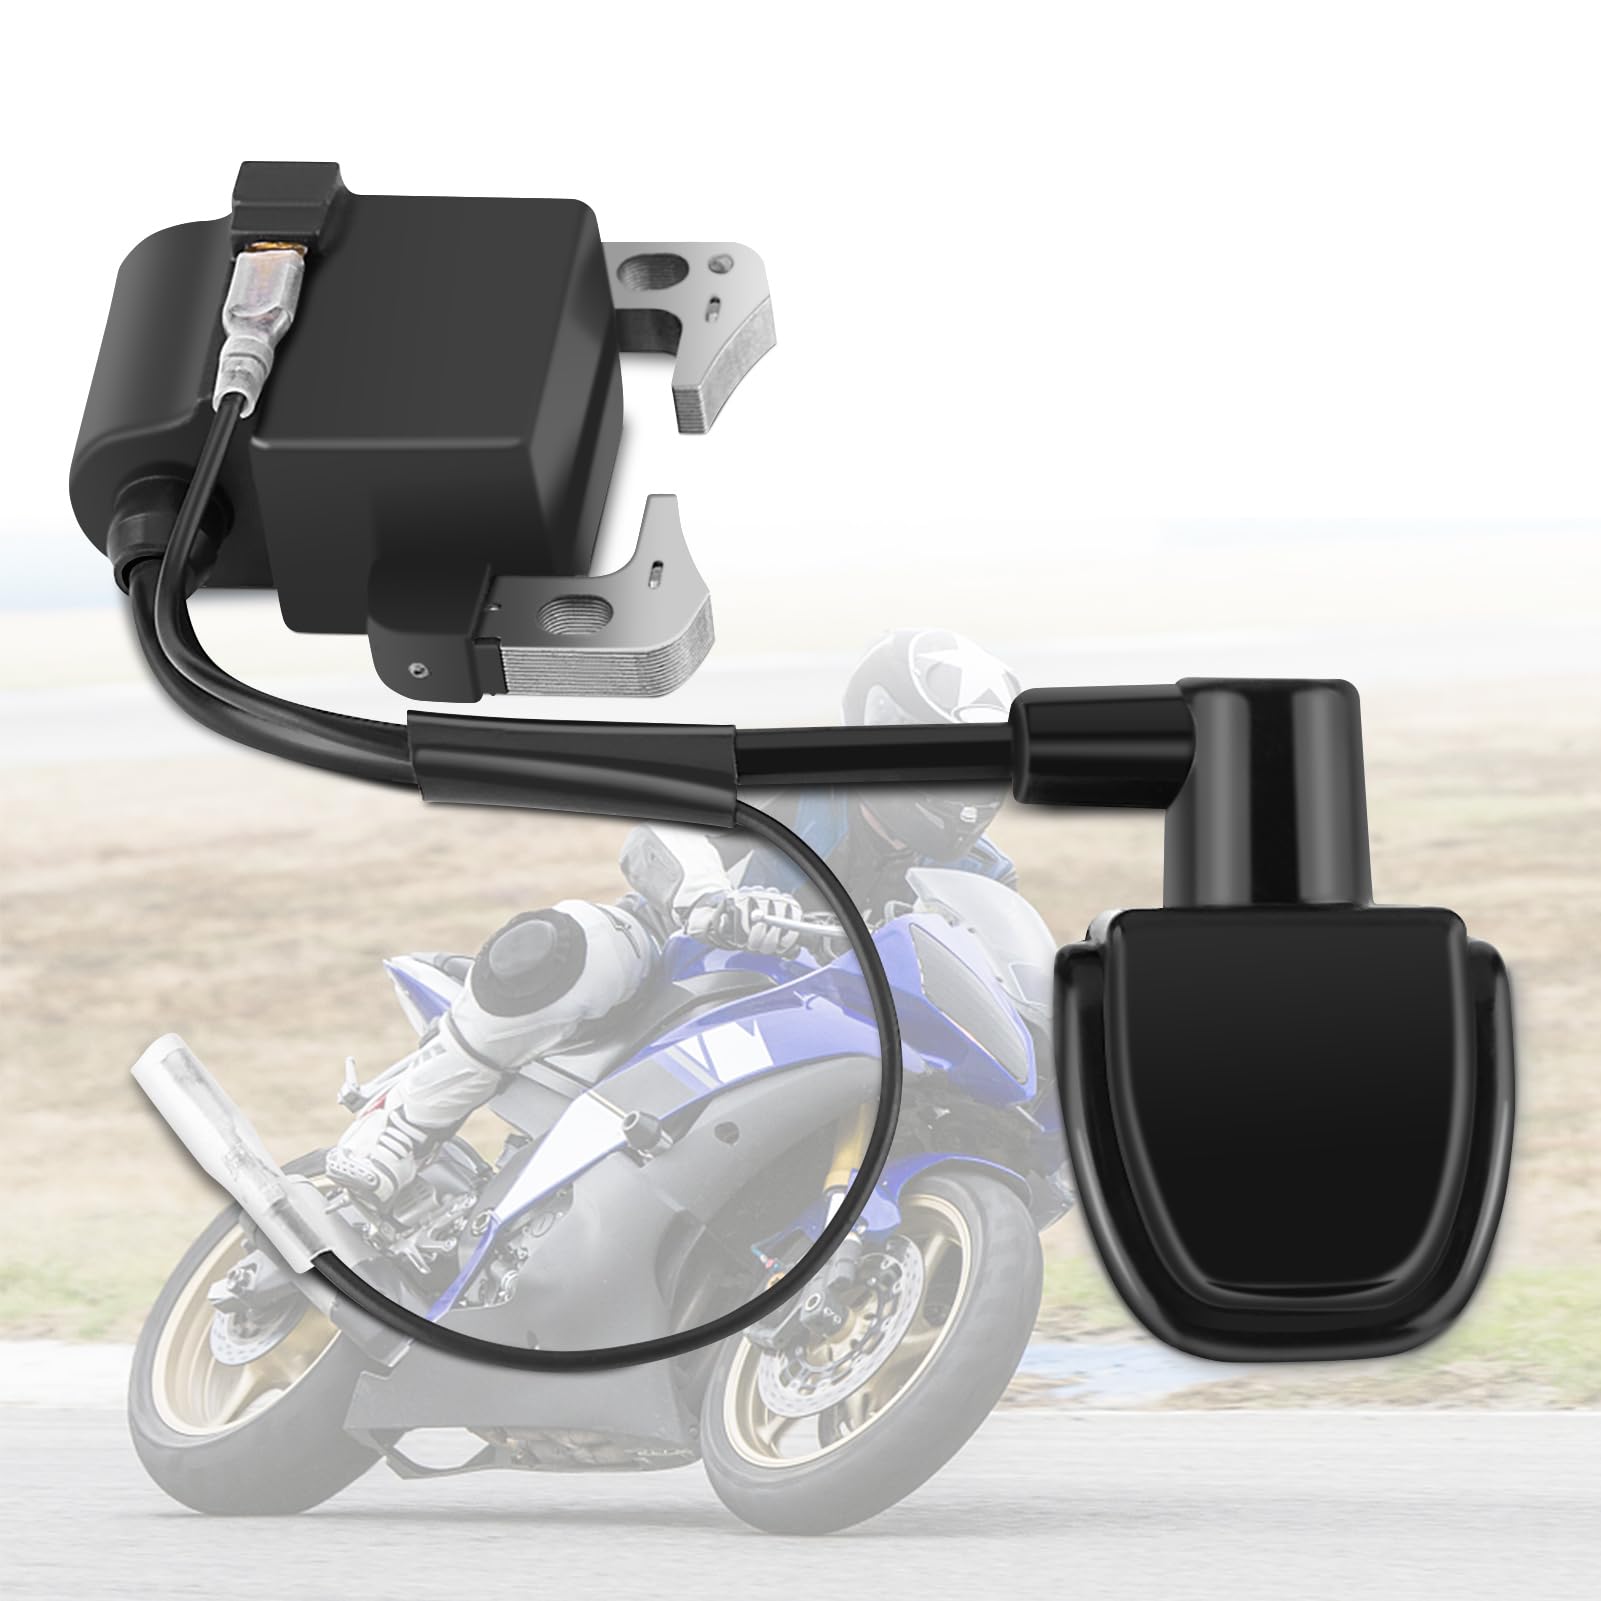 Mini Moto Zündspule Motorrad Zündspule Zündspule für Mini Motor ATV Dirt Bike Quad 49CC 47CC von Yosoo Health Gear